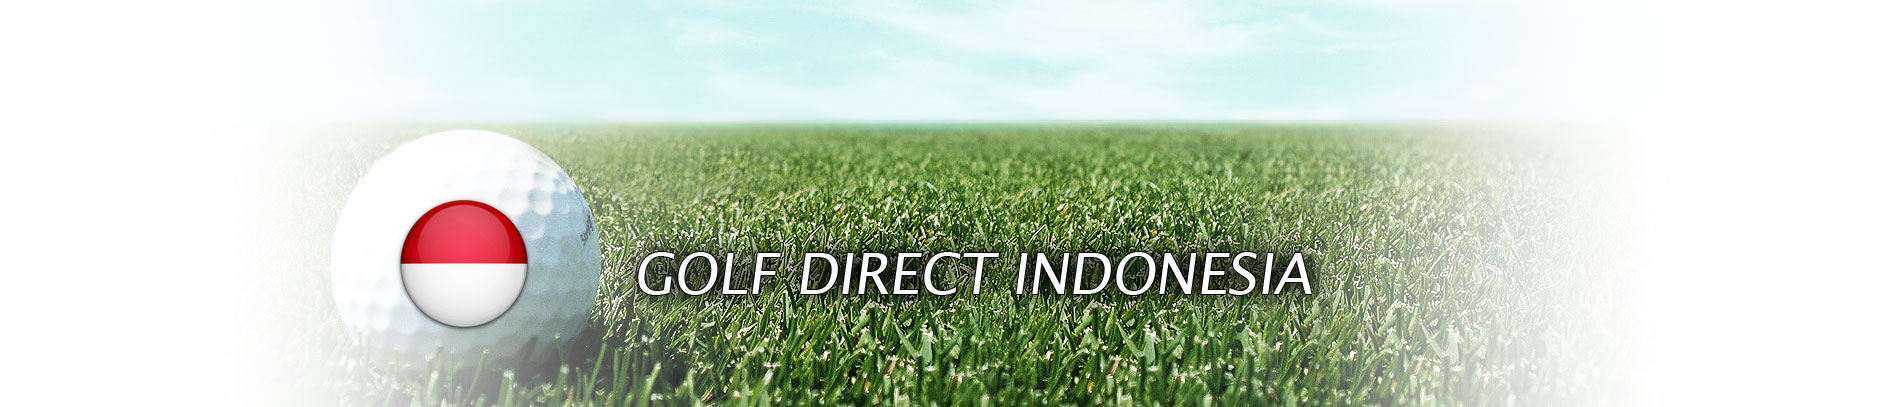 Golf Direct Indonesia